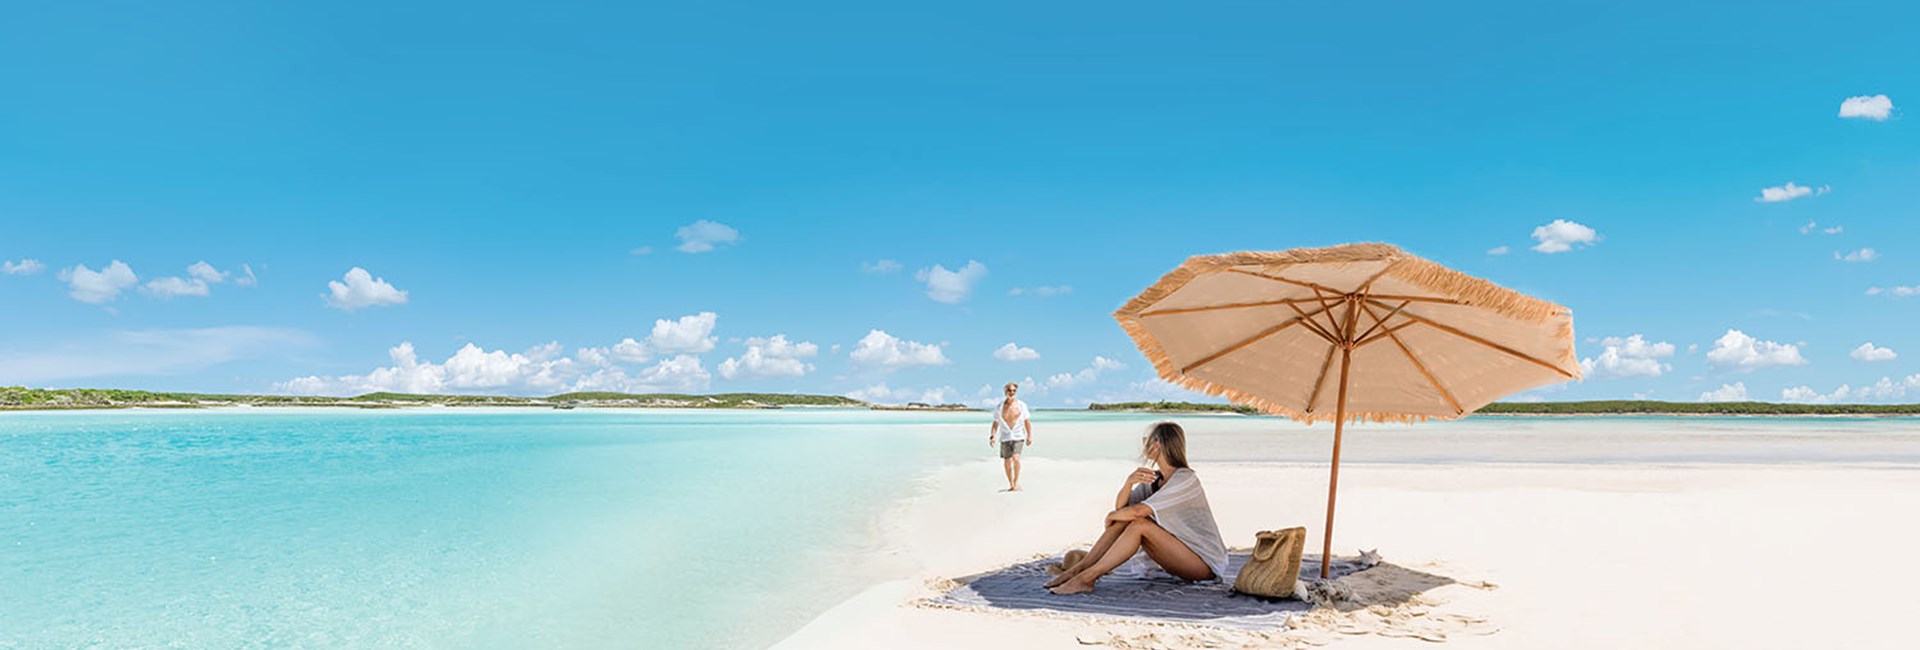 woman under parasol on sandy beach against turquoise Caribbean ocean & azure sky